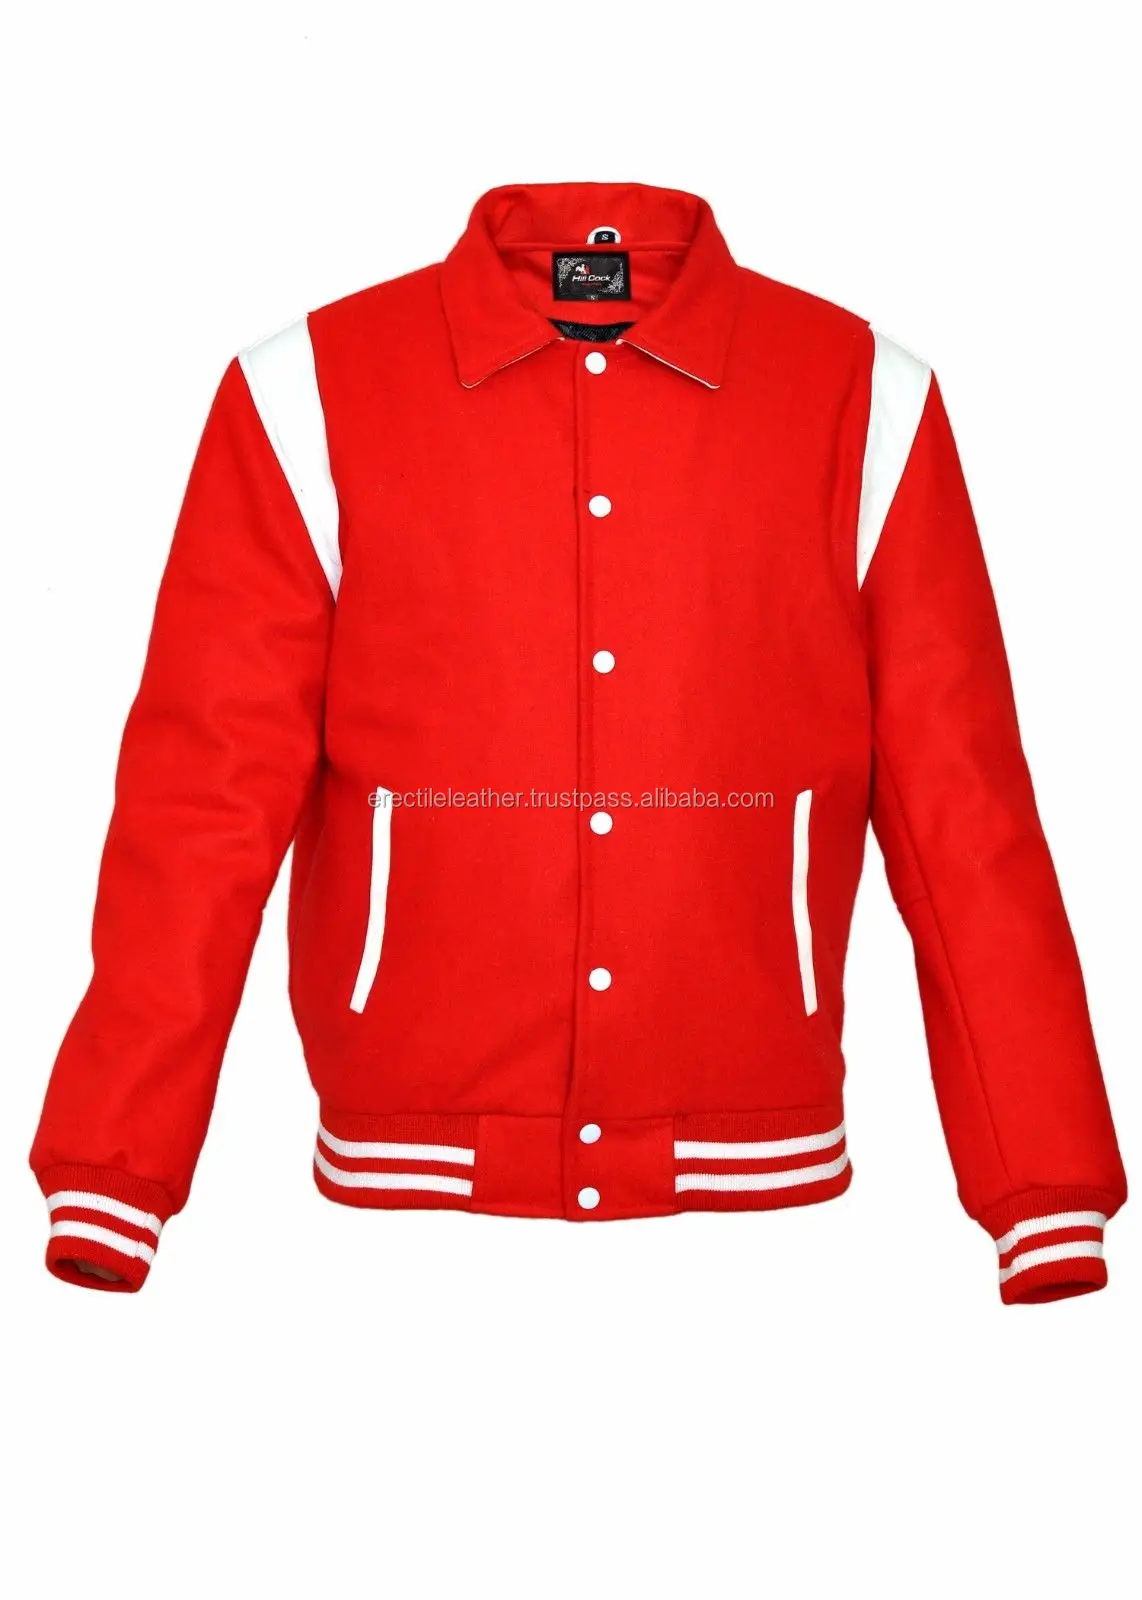 Red And White Varsity Jacket Shops Online, 62% OFF | prep.openr.fr